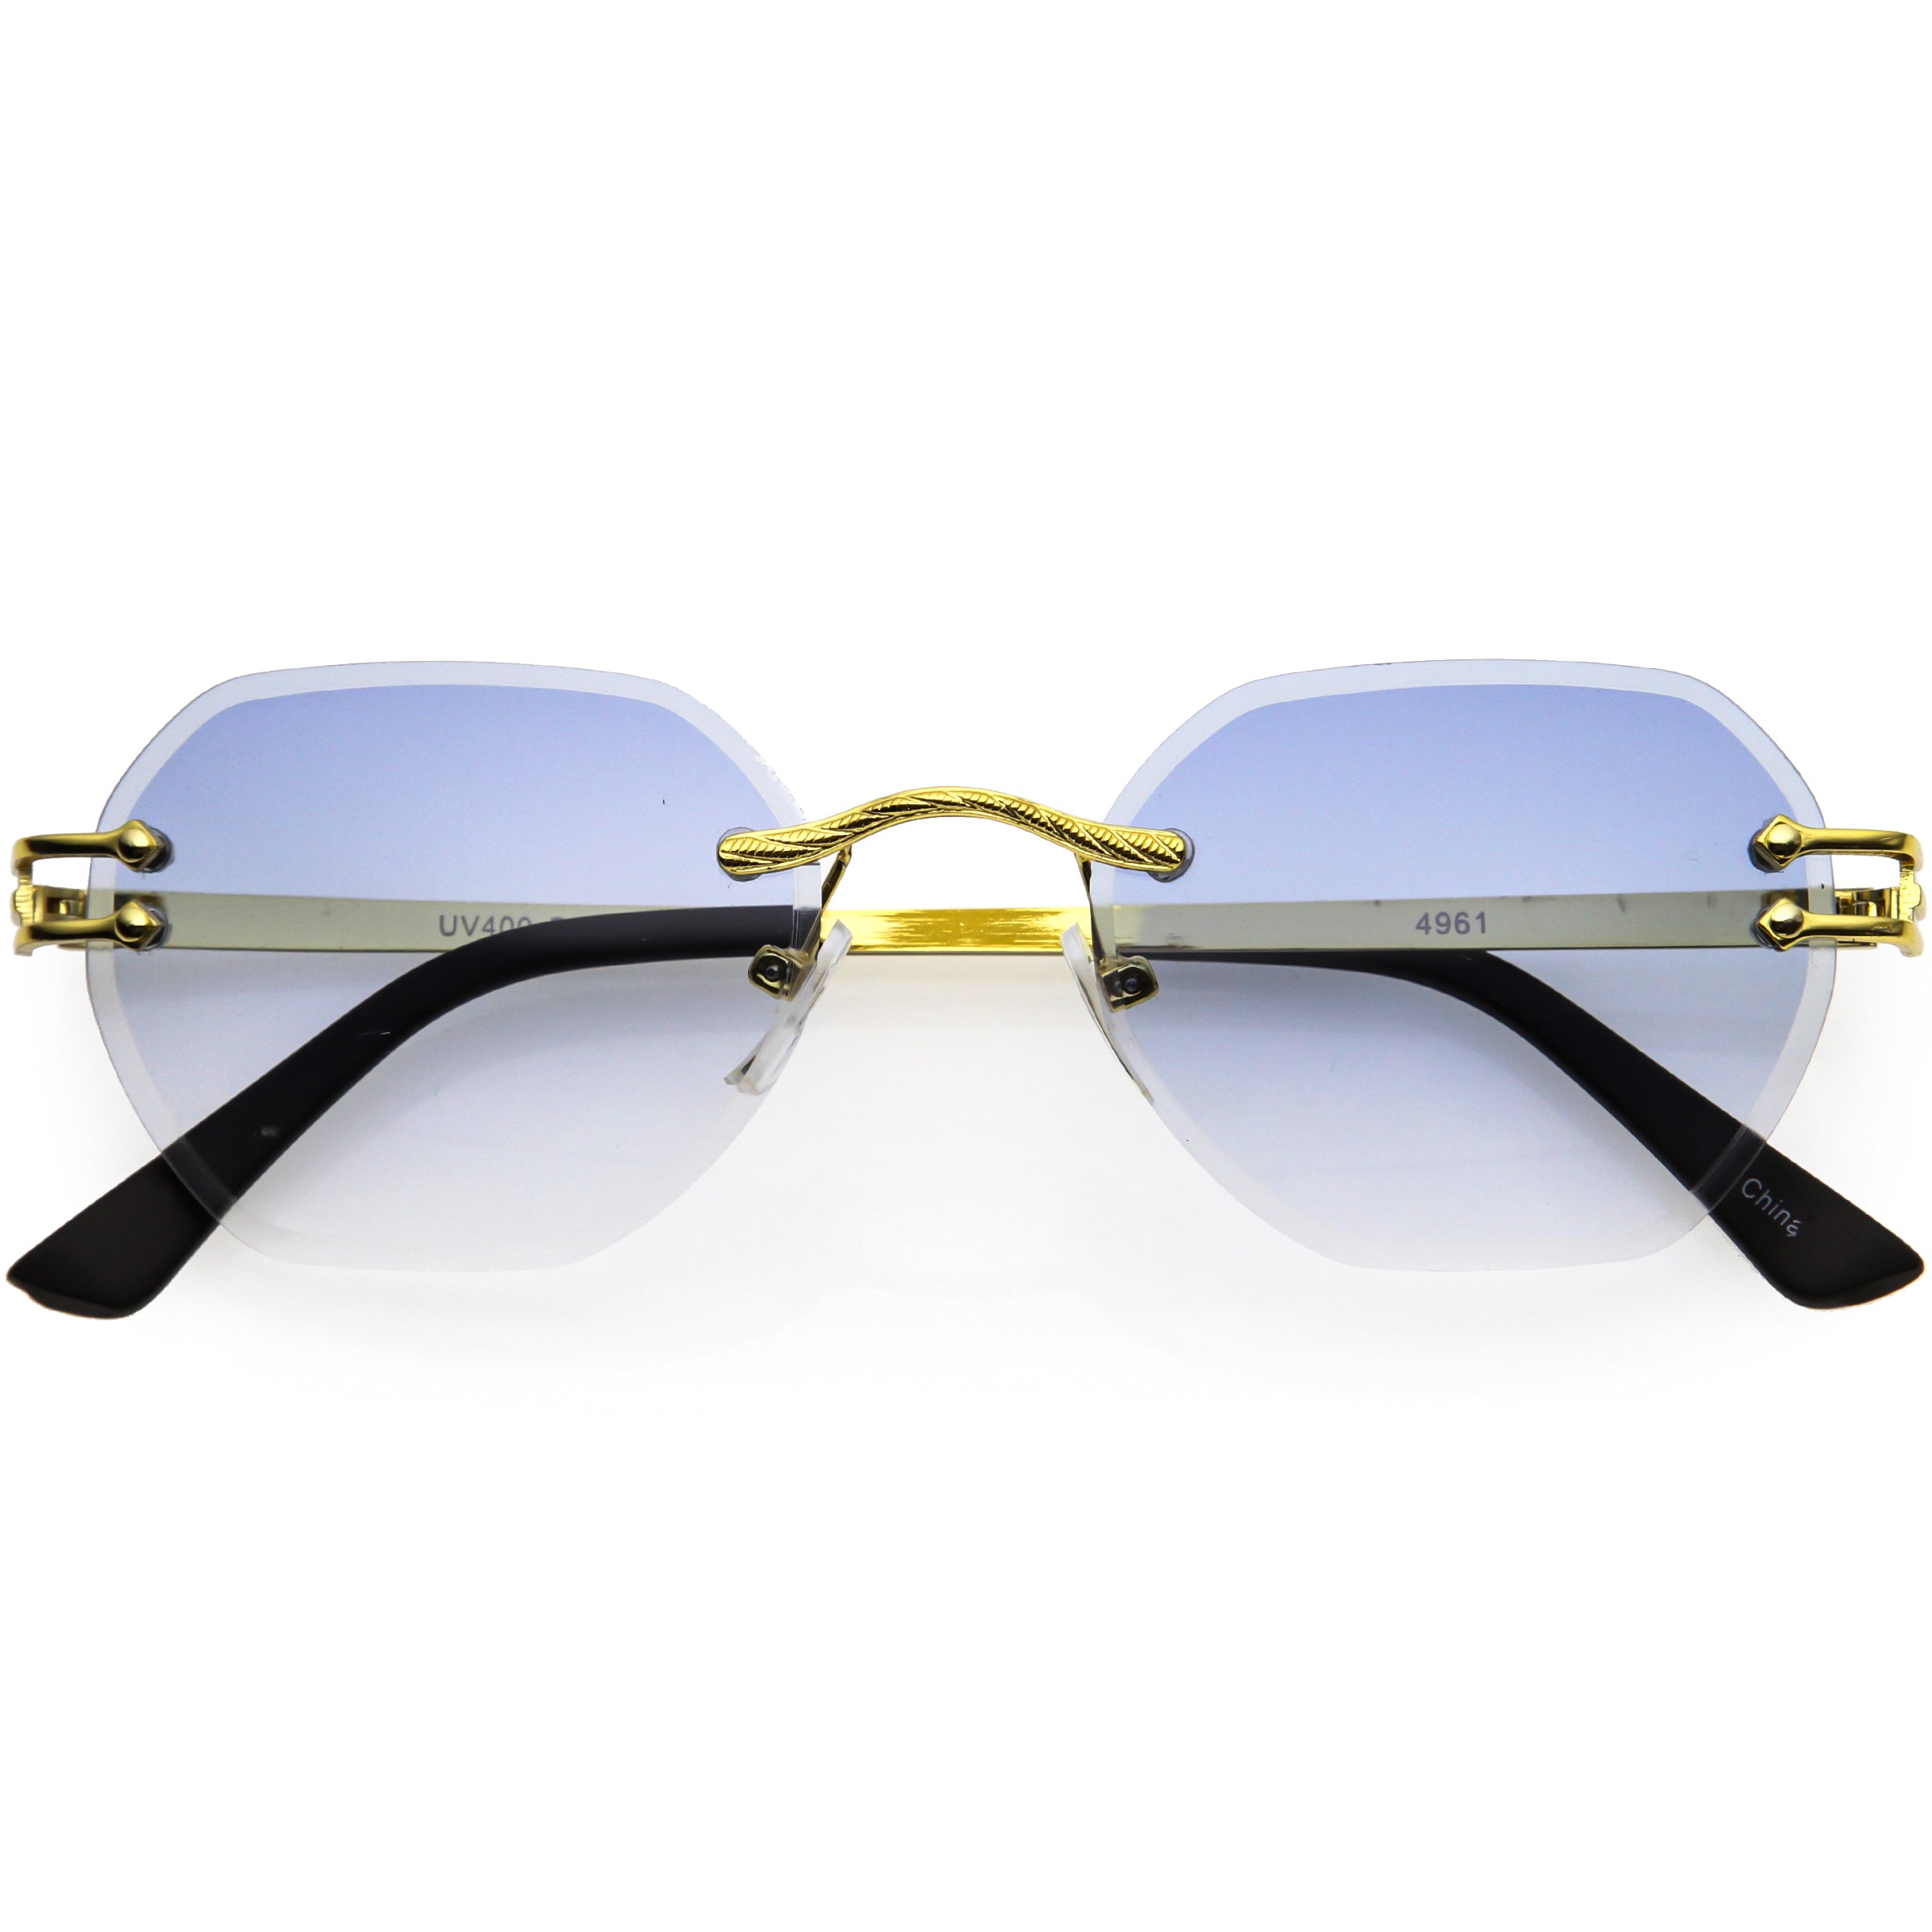 Peekaboo gold square sunglasses for women 2019 black silver mirror